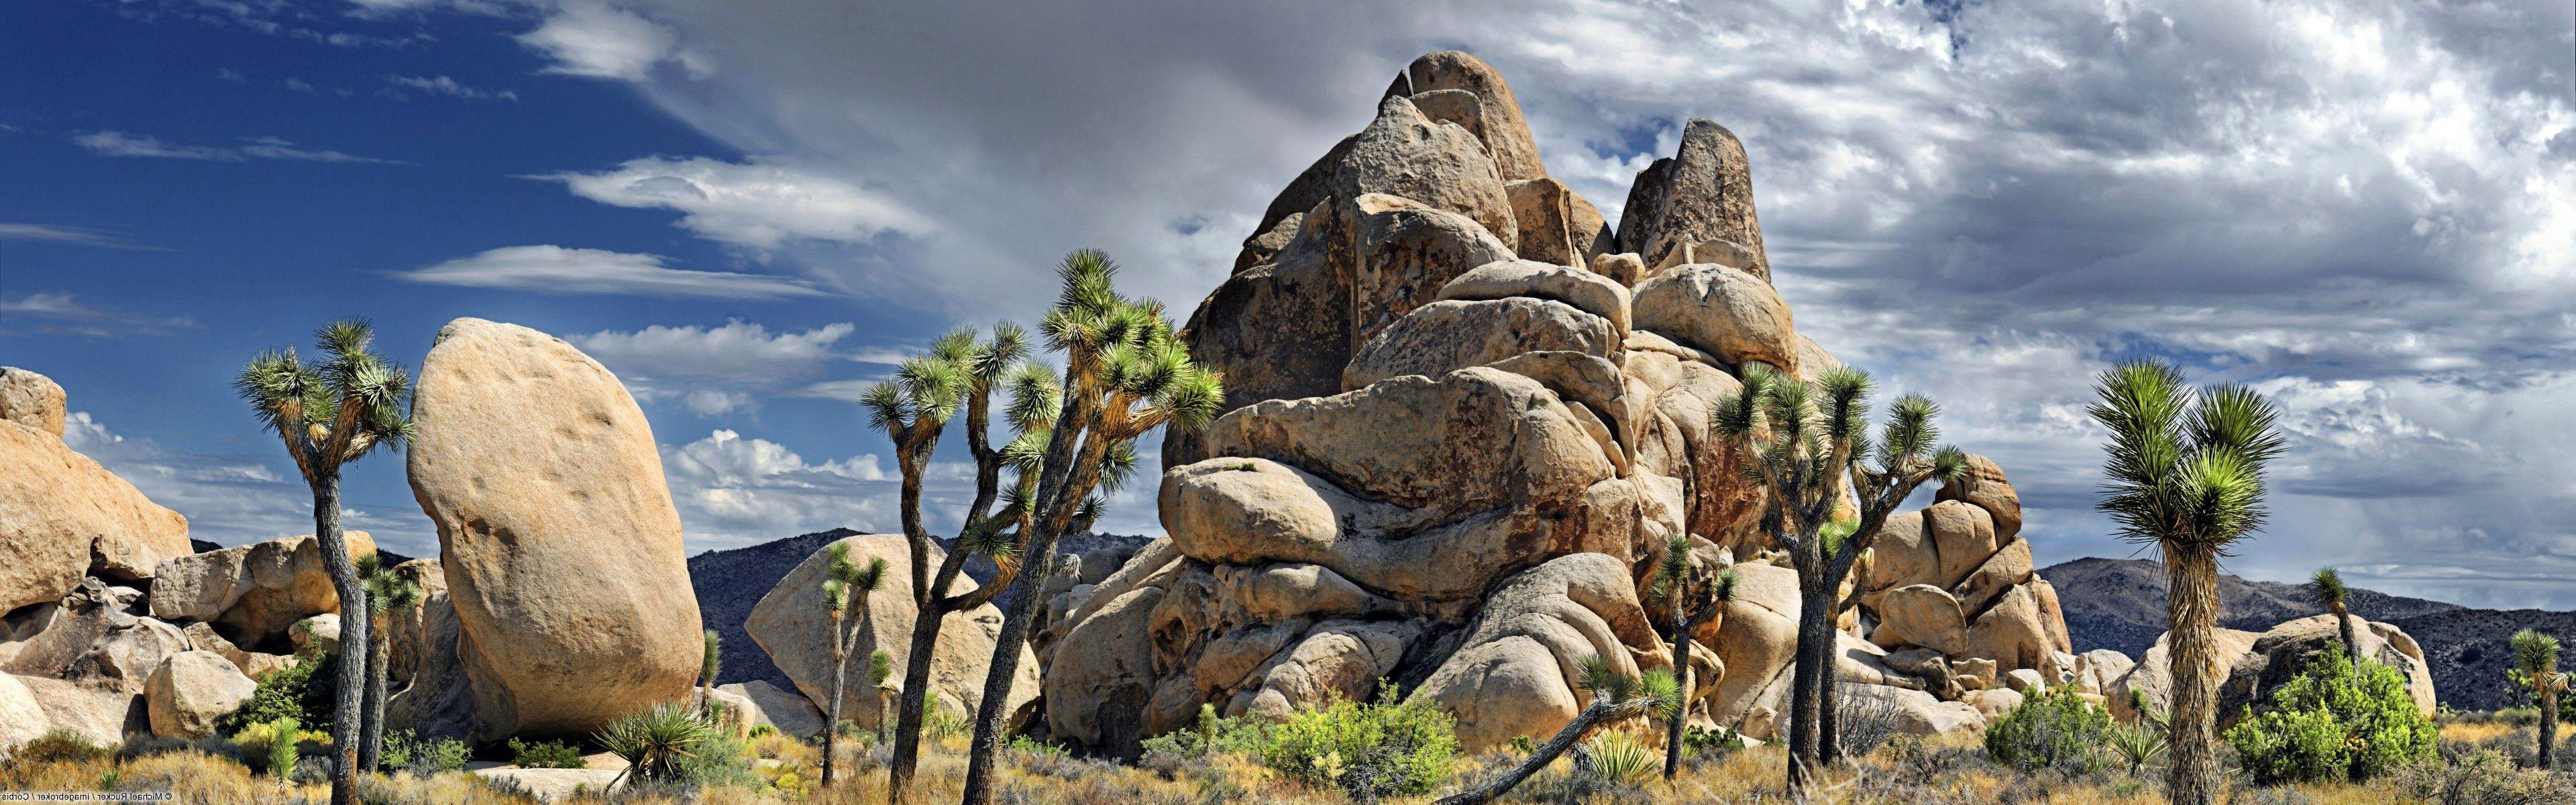 boulders, california, clouds, desert, joshua tree national park